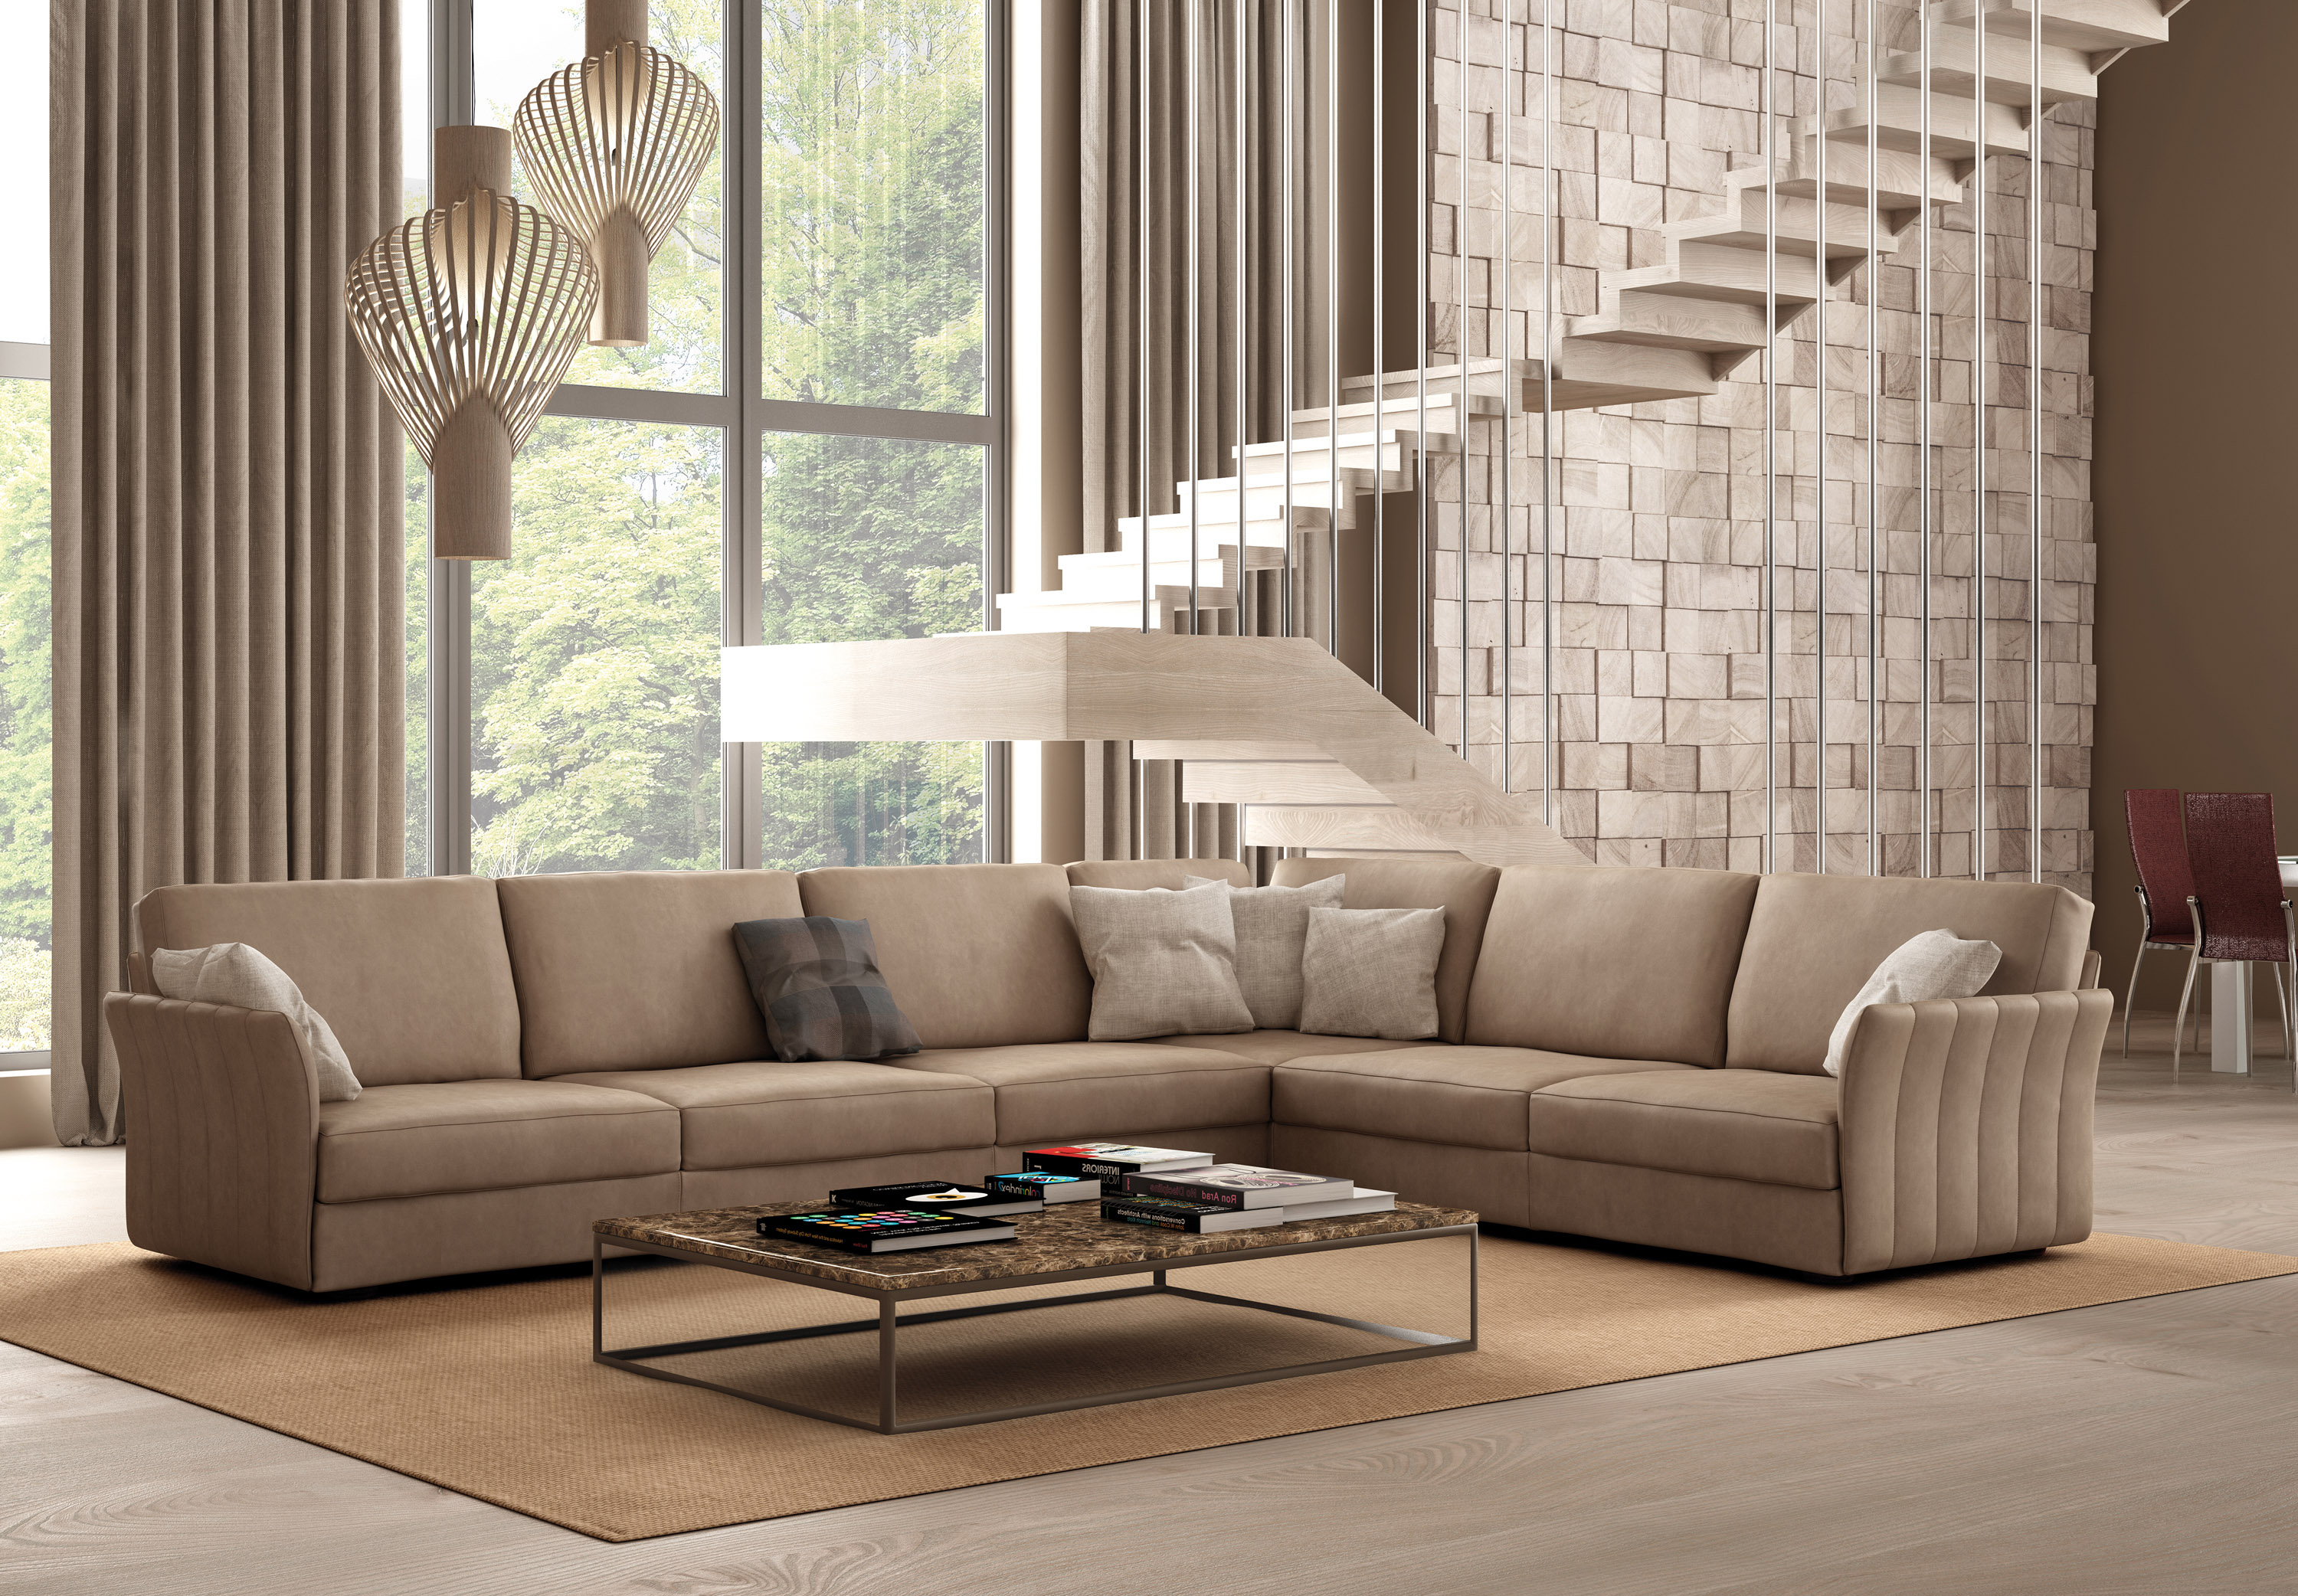 italia modern chesterfield leather sofa